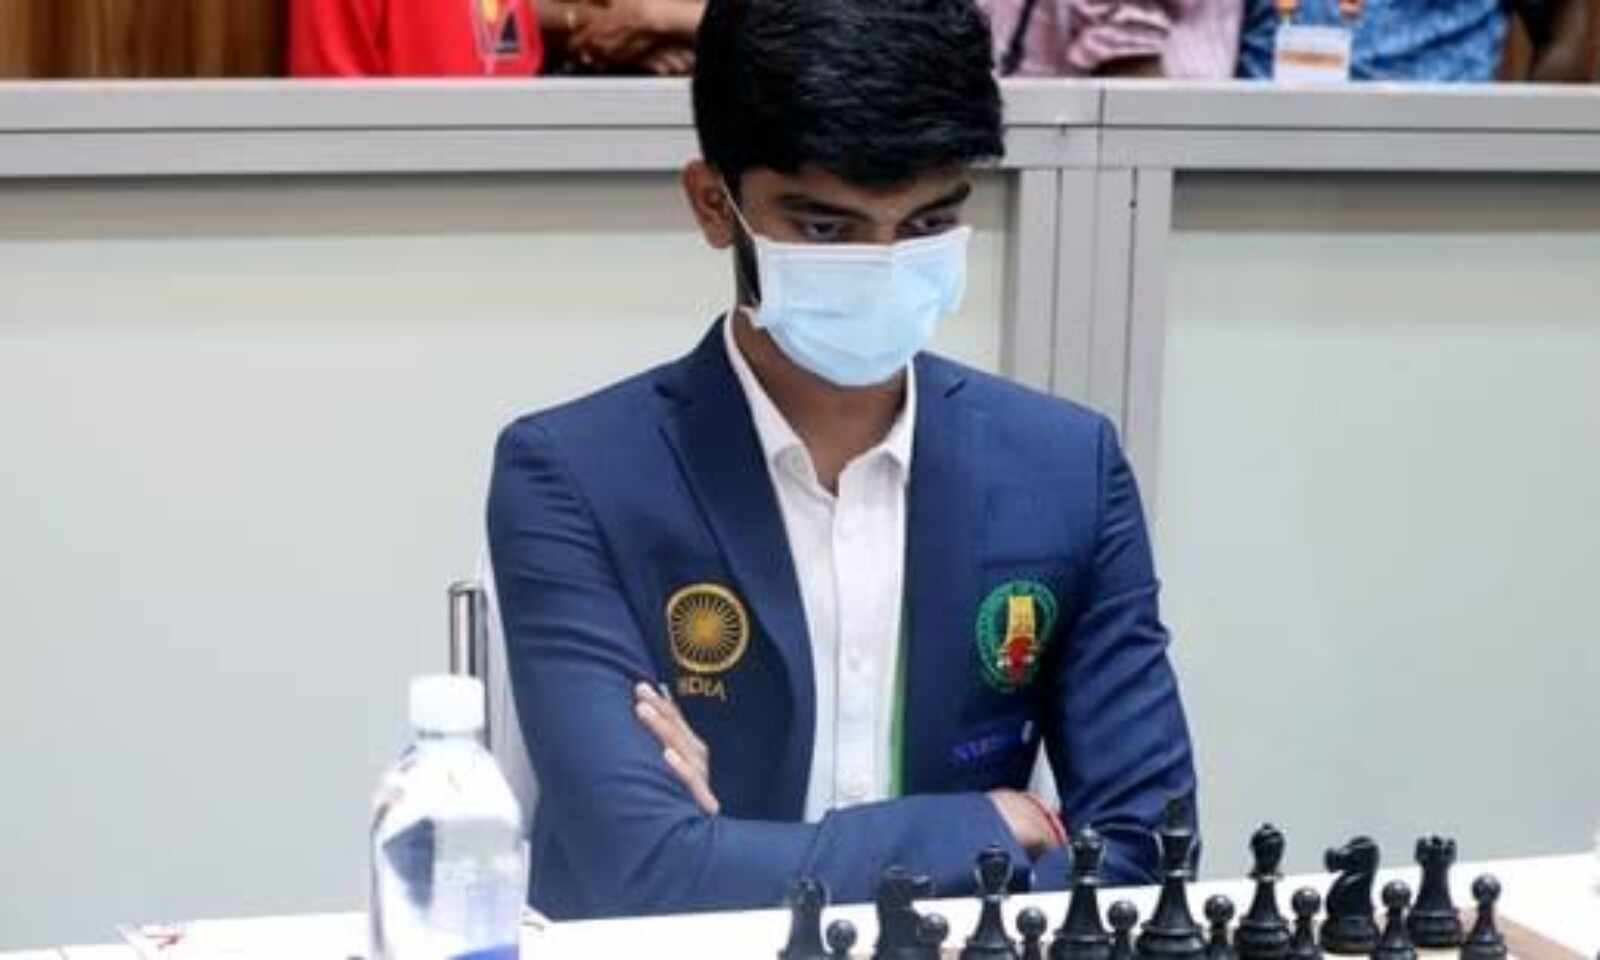 Indian teen Donnarumma Gukesh stuns Magnus Carlsen in Aimchess Rapid online  tournament